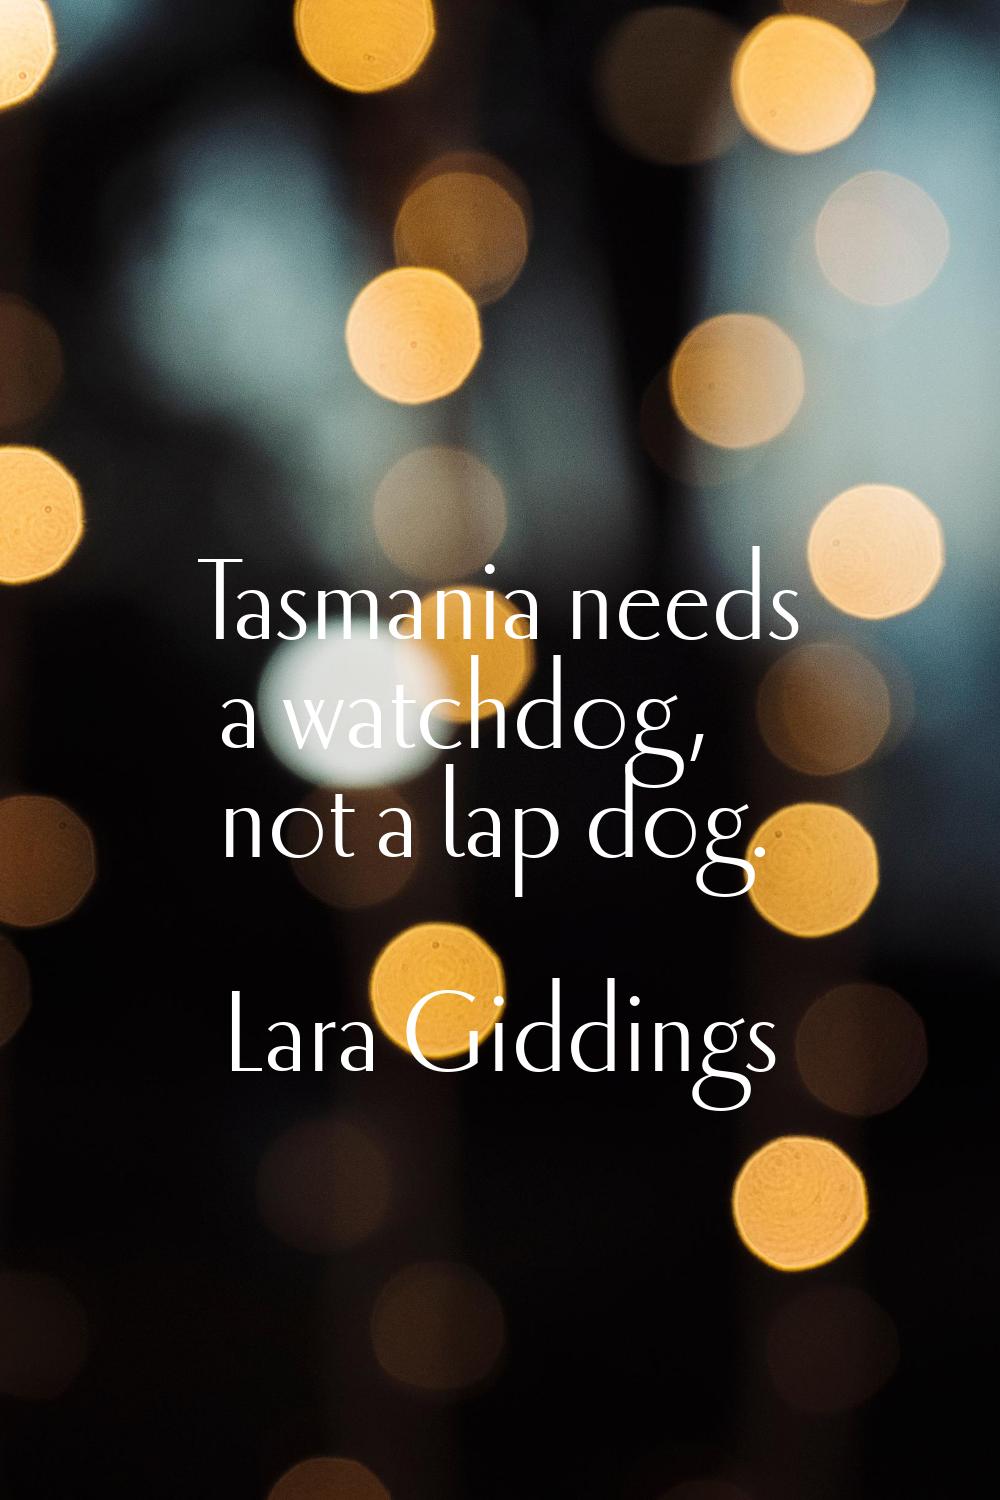 Tasmania needs a watchdog, not a lap dog.